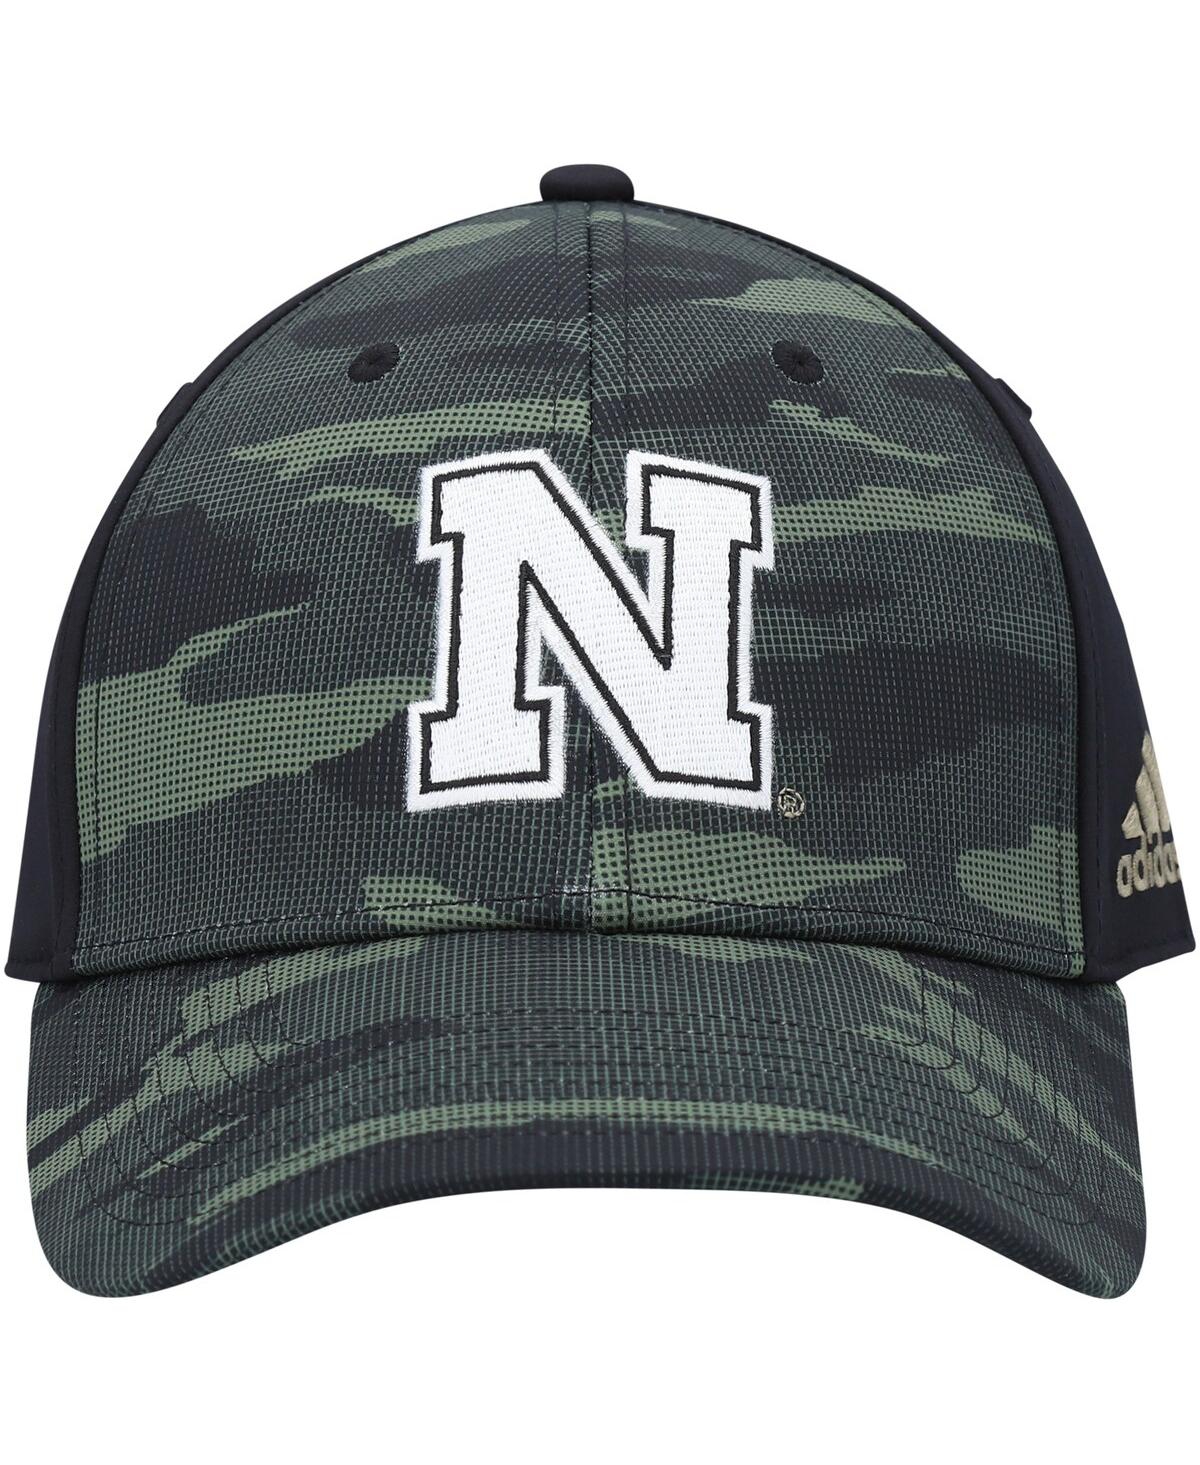 Shop Adidas Originals Men's Adidas Camo Nebraska Huskers Military-inspired Appreciation Flex Hat